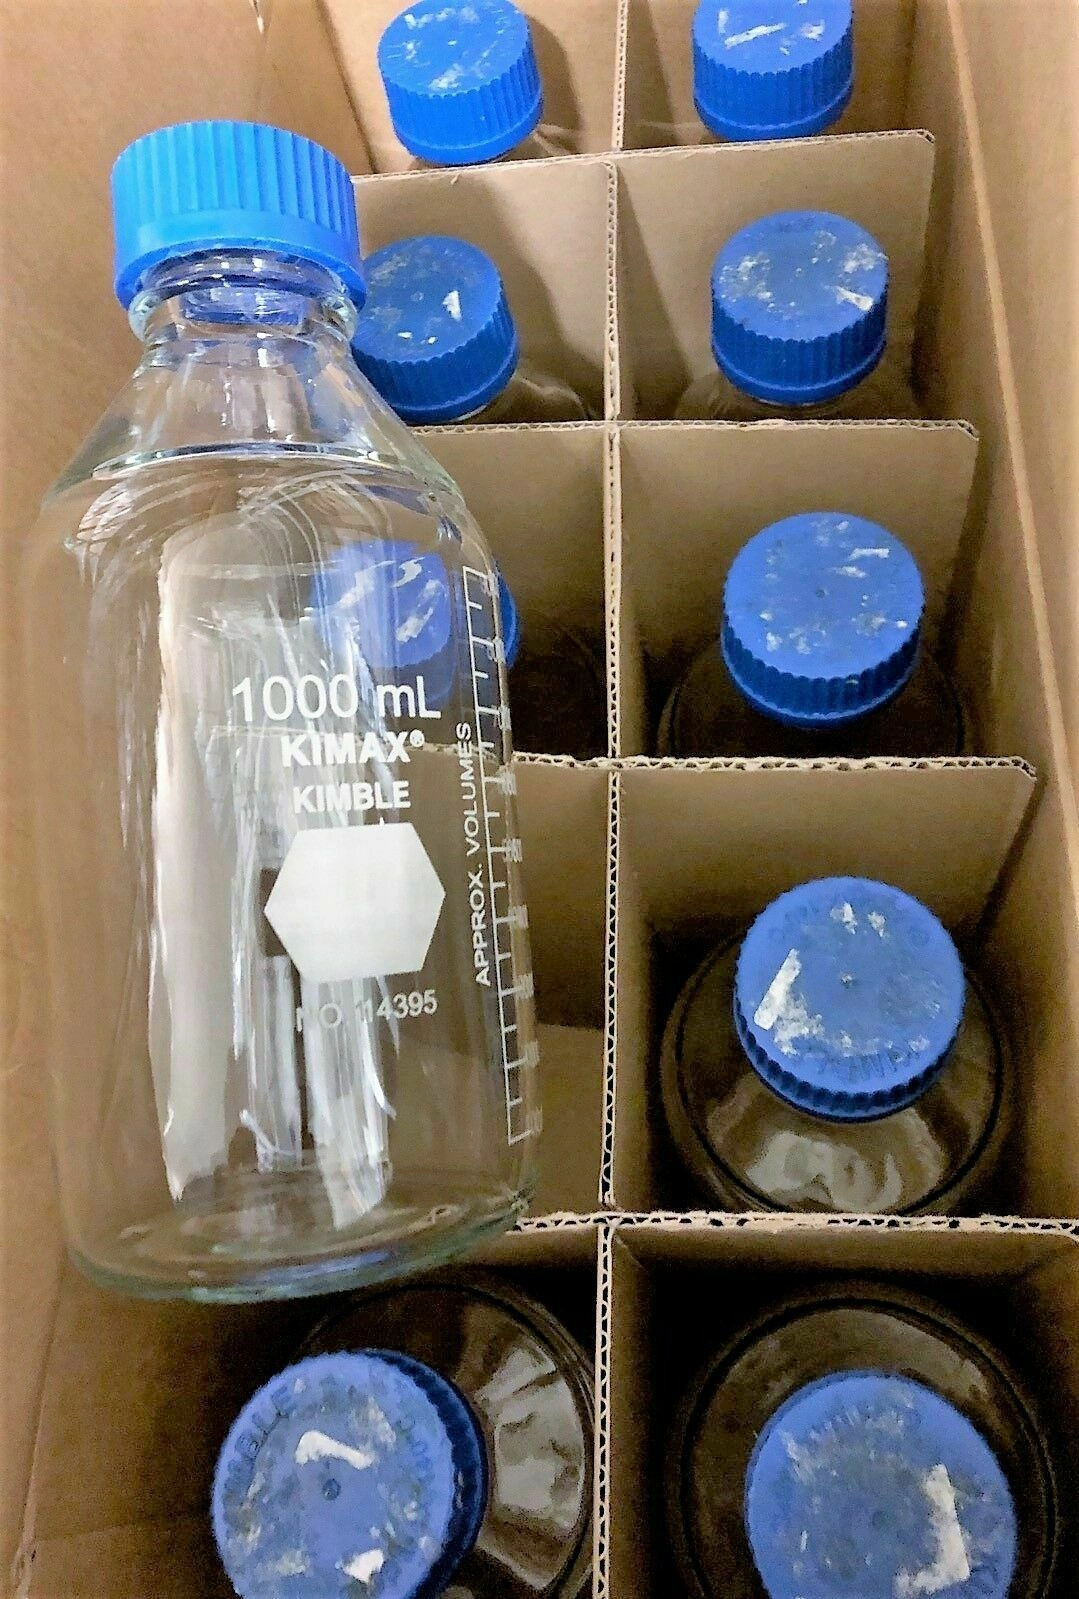 KIMAX Milk Dilution Bottles